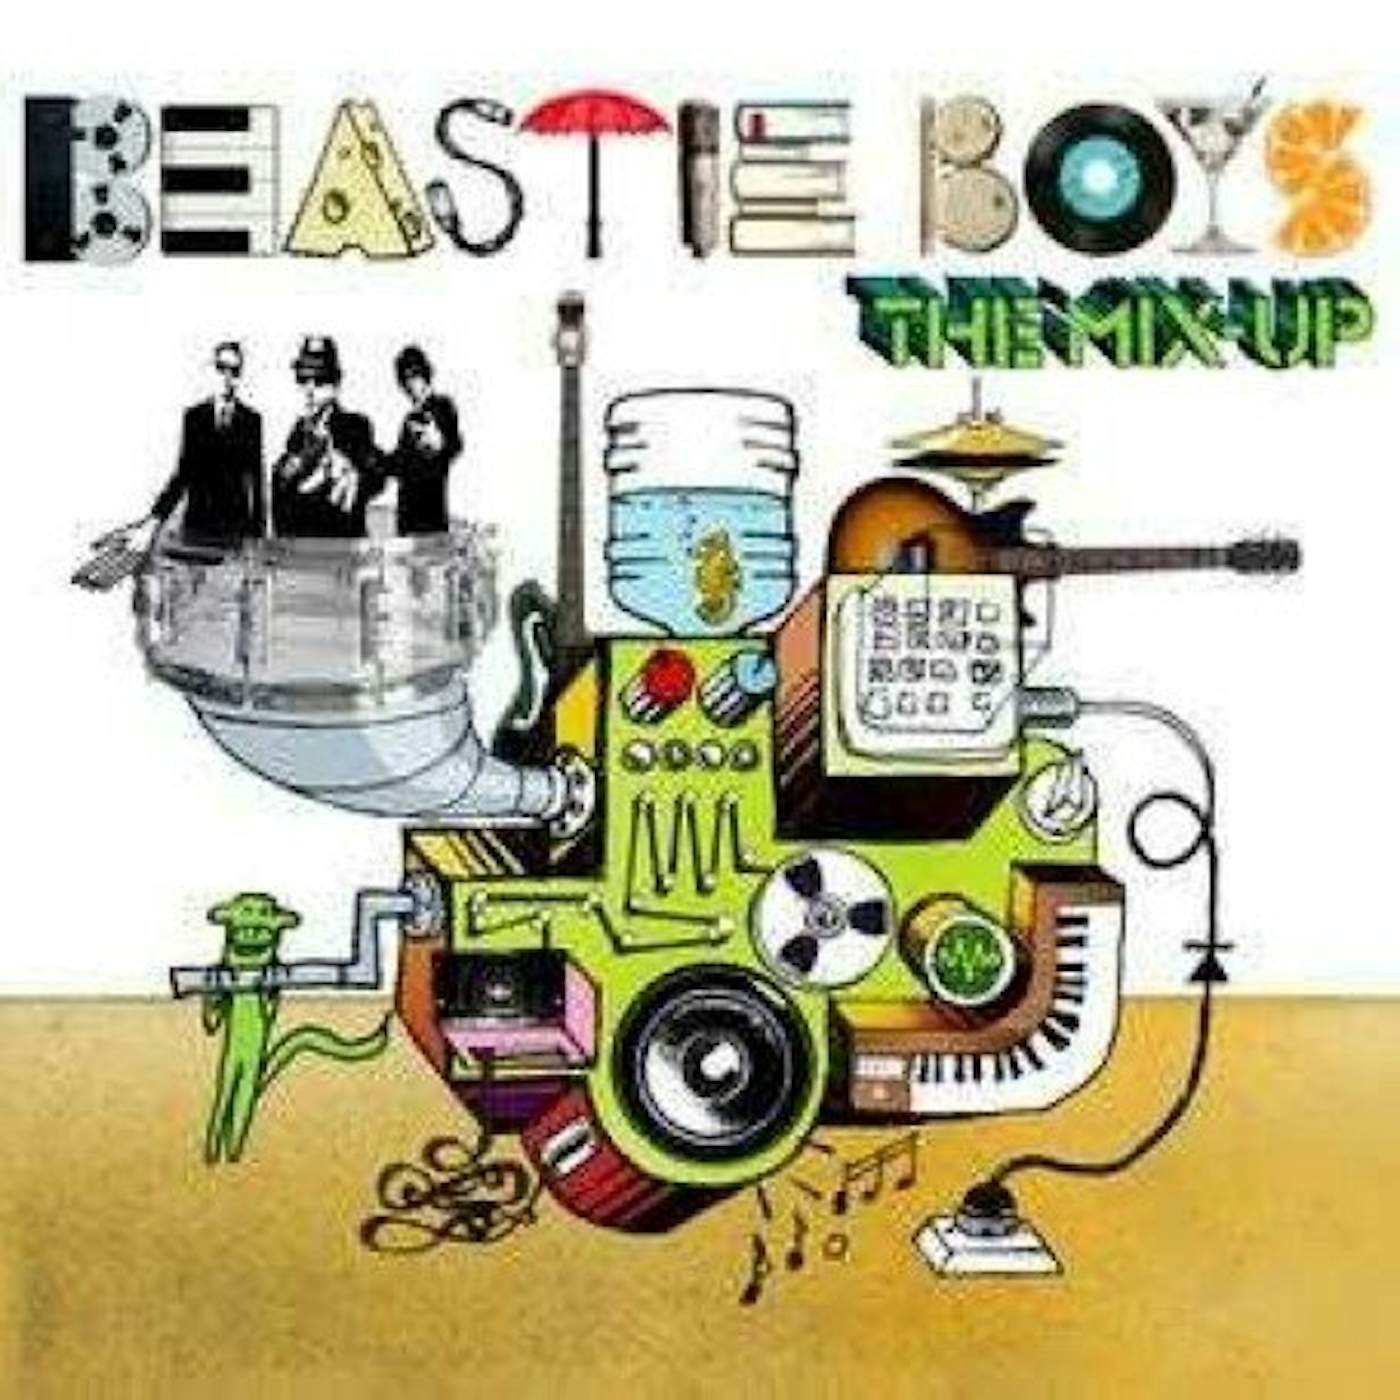 Beastie Boys MIX-UP Vinyl Record